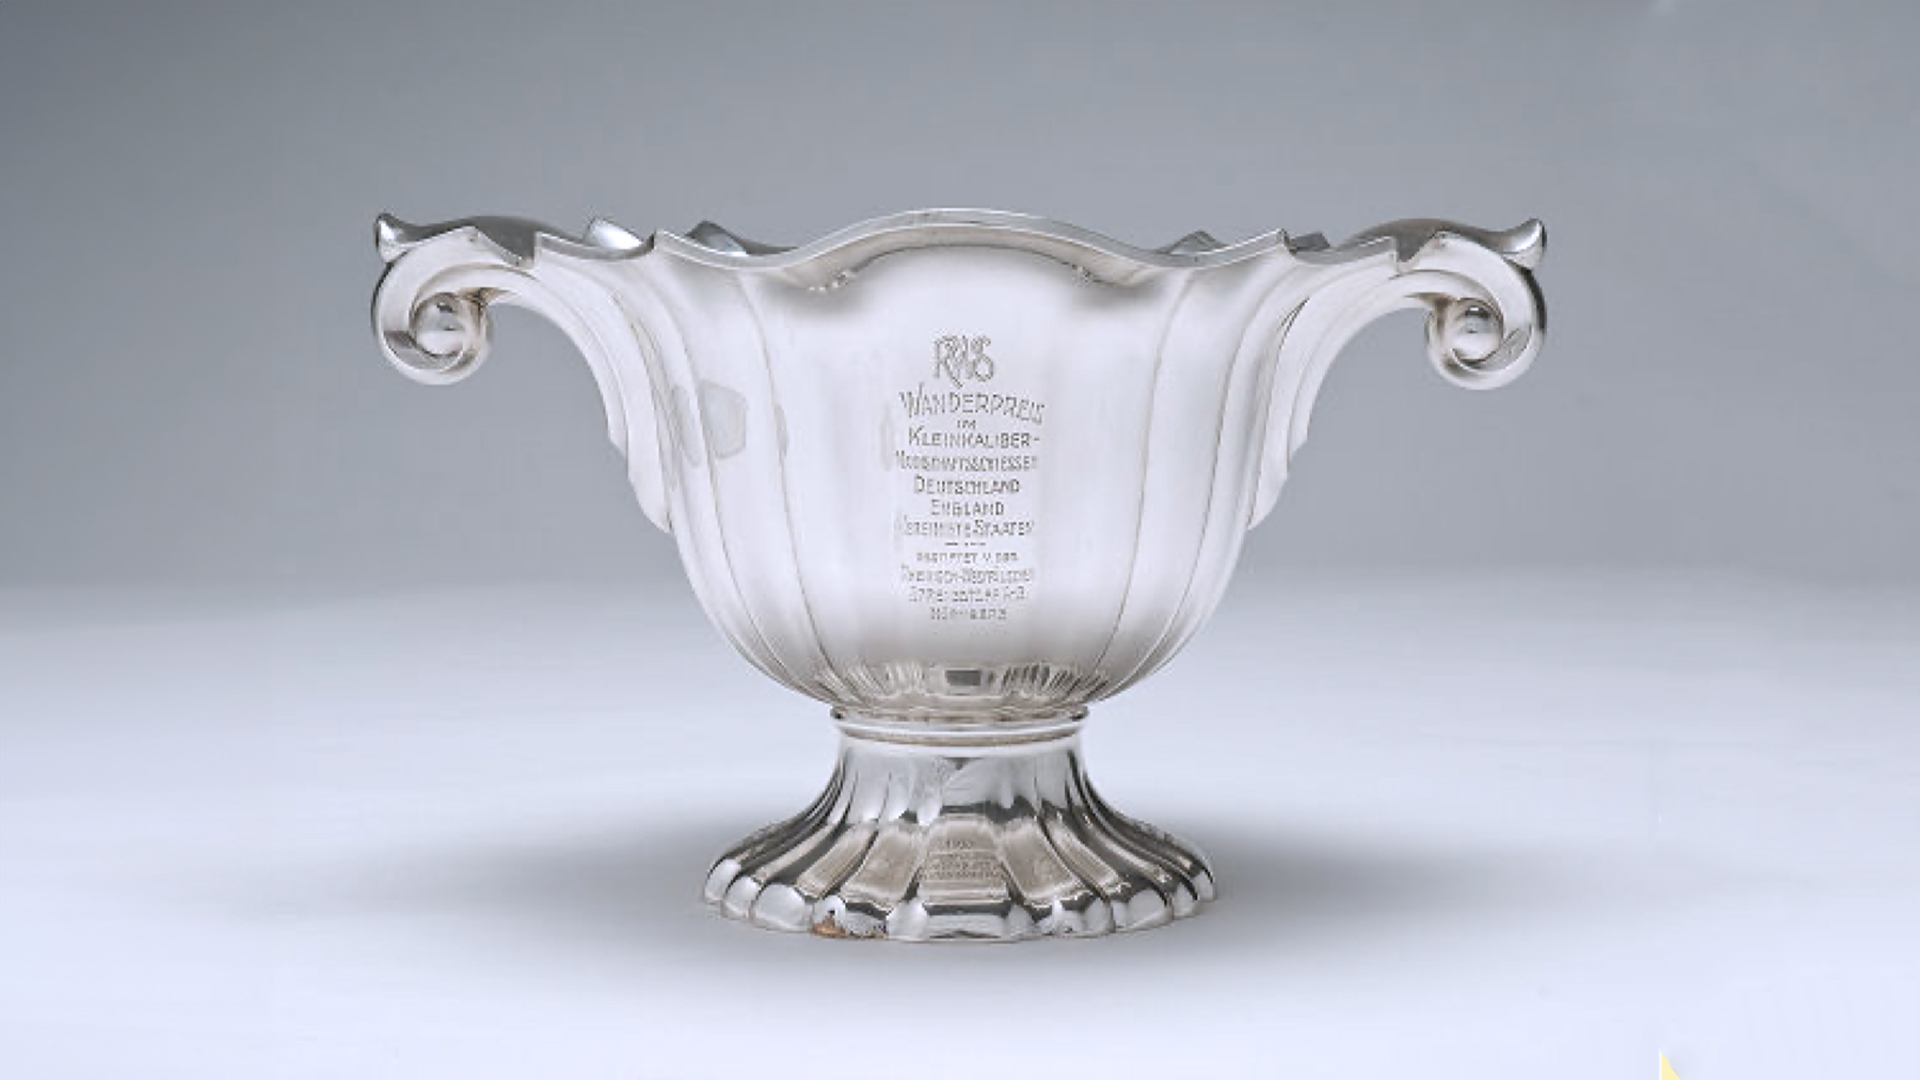 RWS Trophy bowl